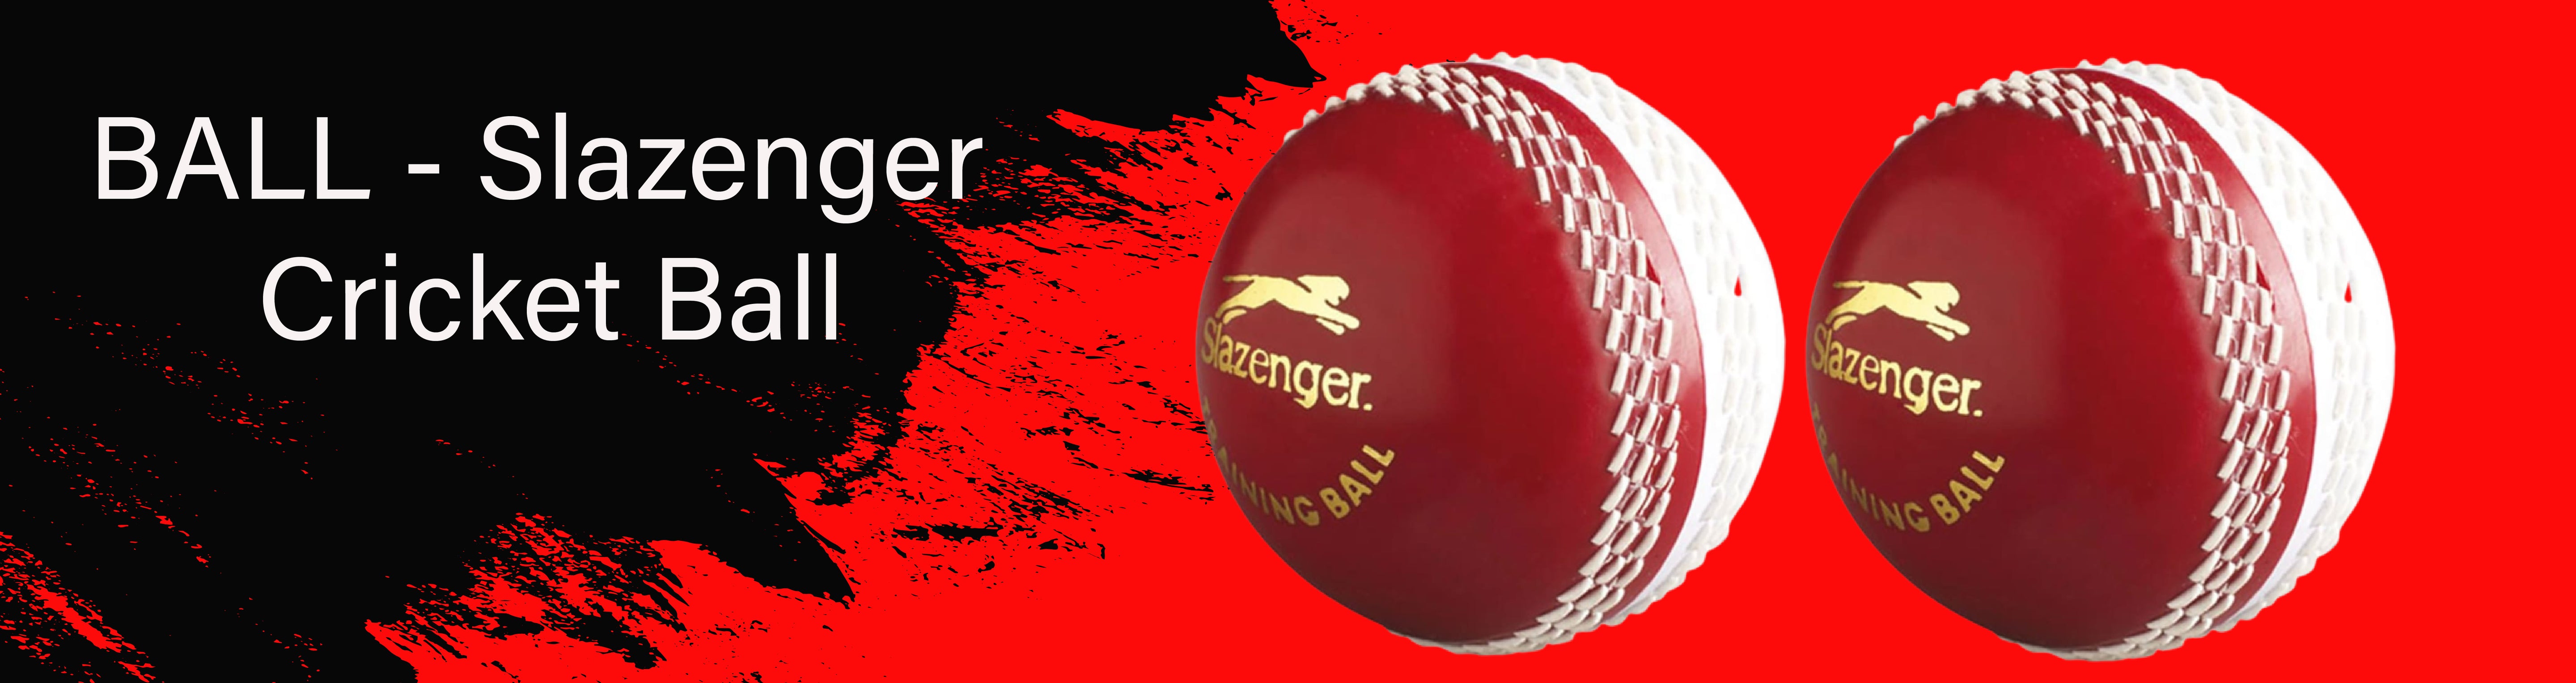 BALL - Slazenger Cricket Ball